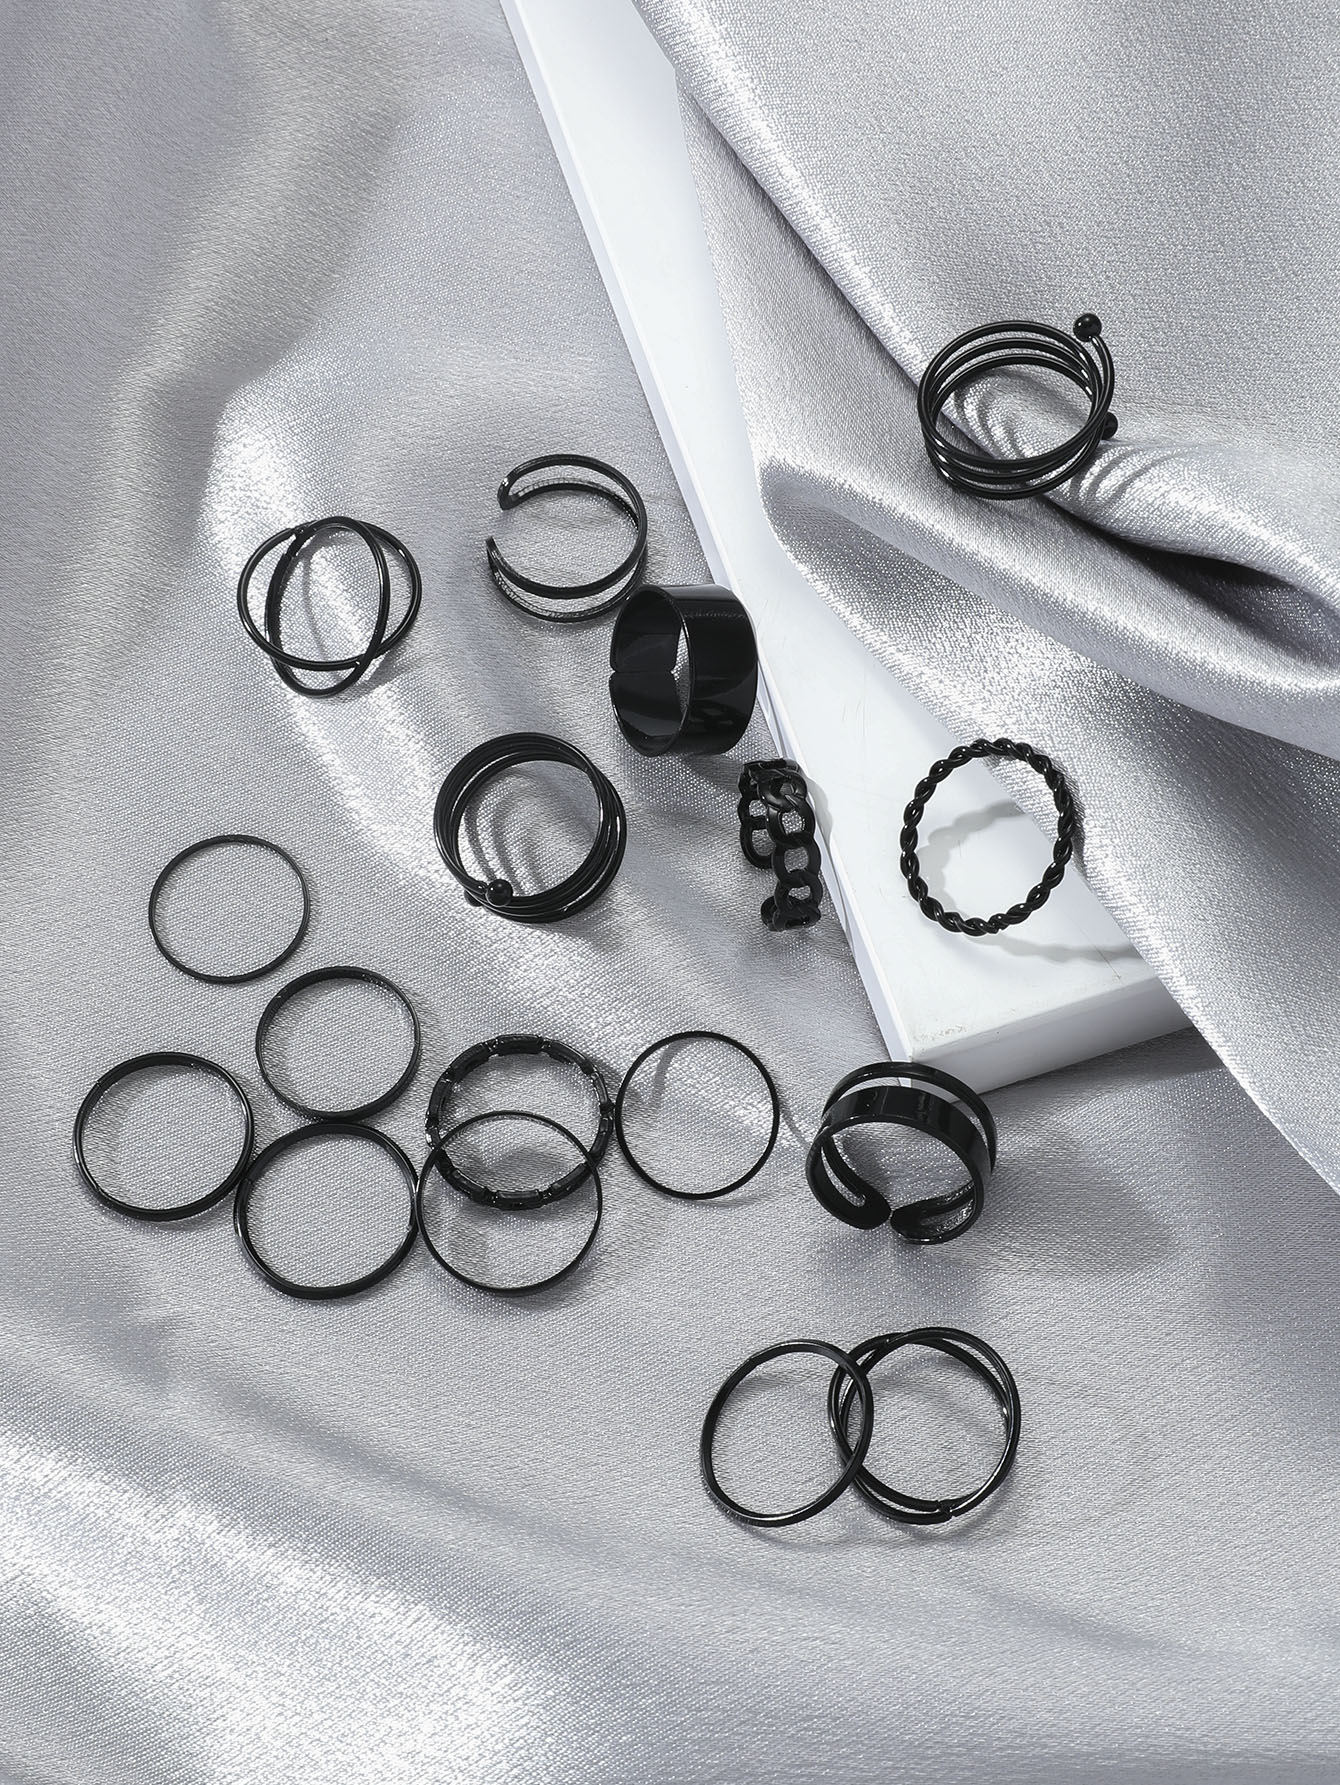 16pcs Set Black Simple Knuckle Design Rings | Discounts For